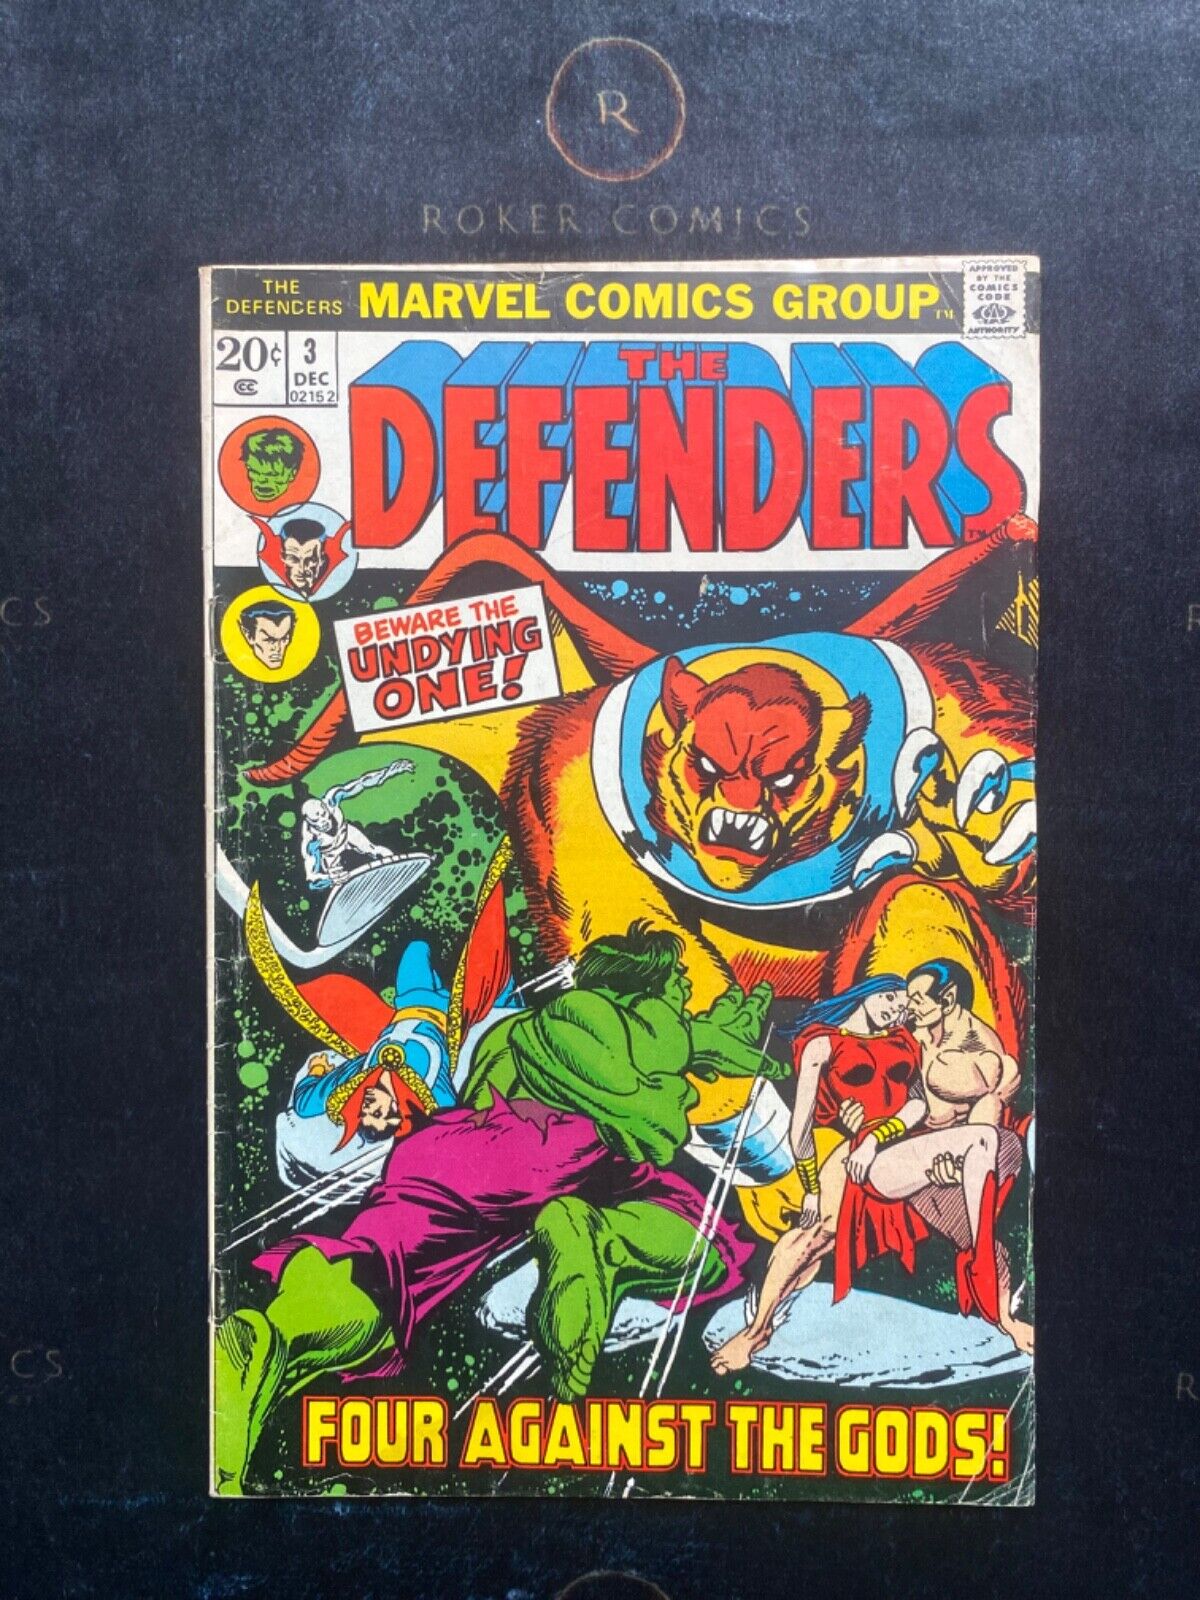 Very Rare 1972 Defenders #3